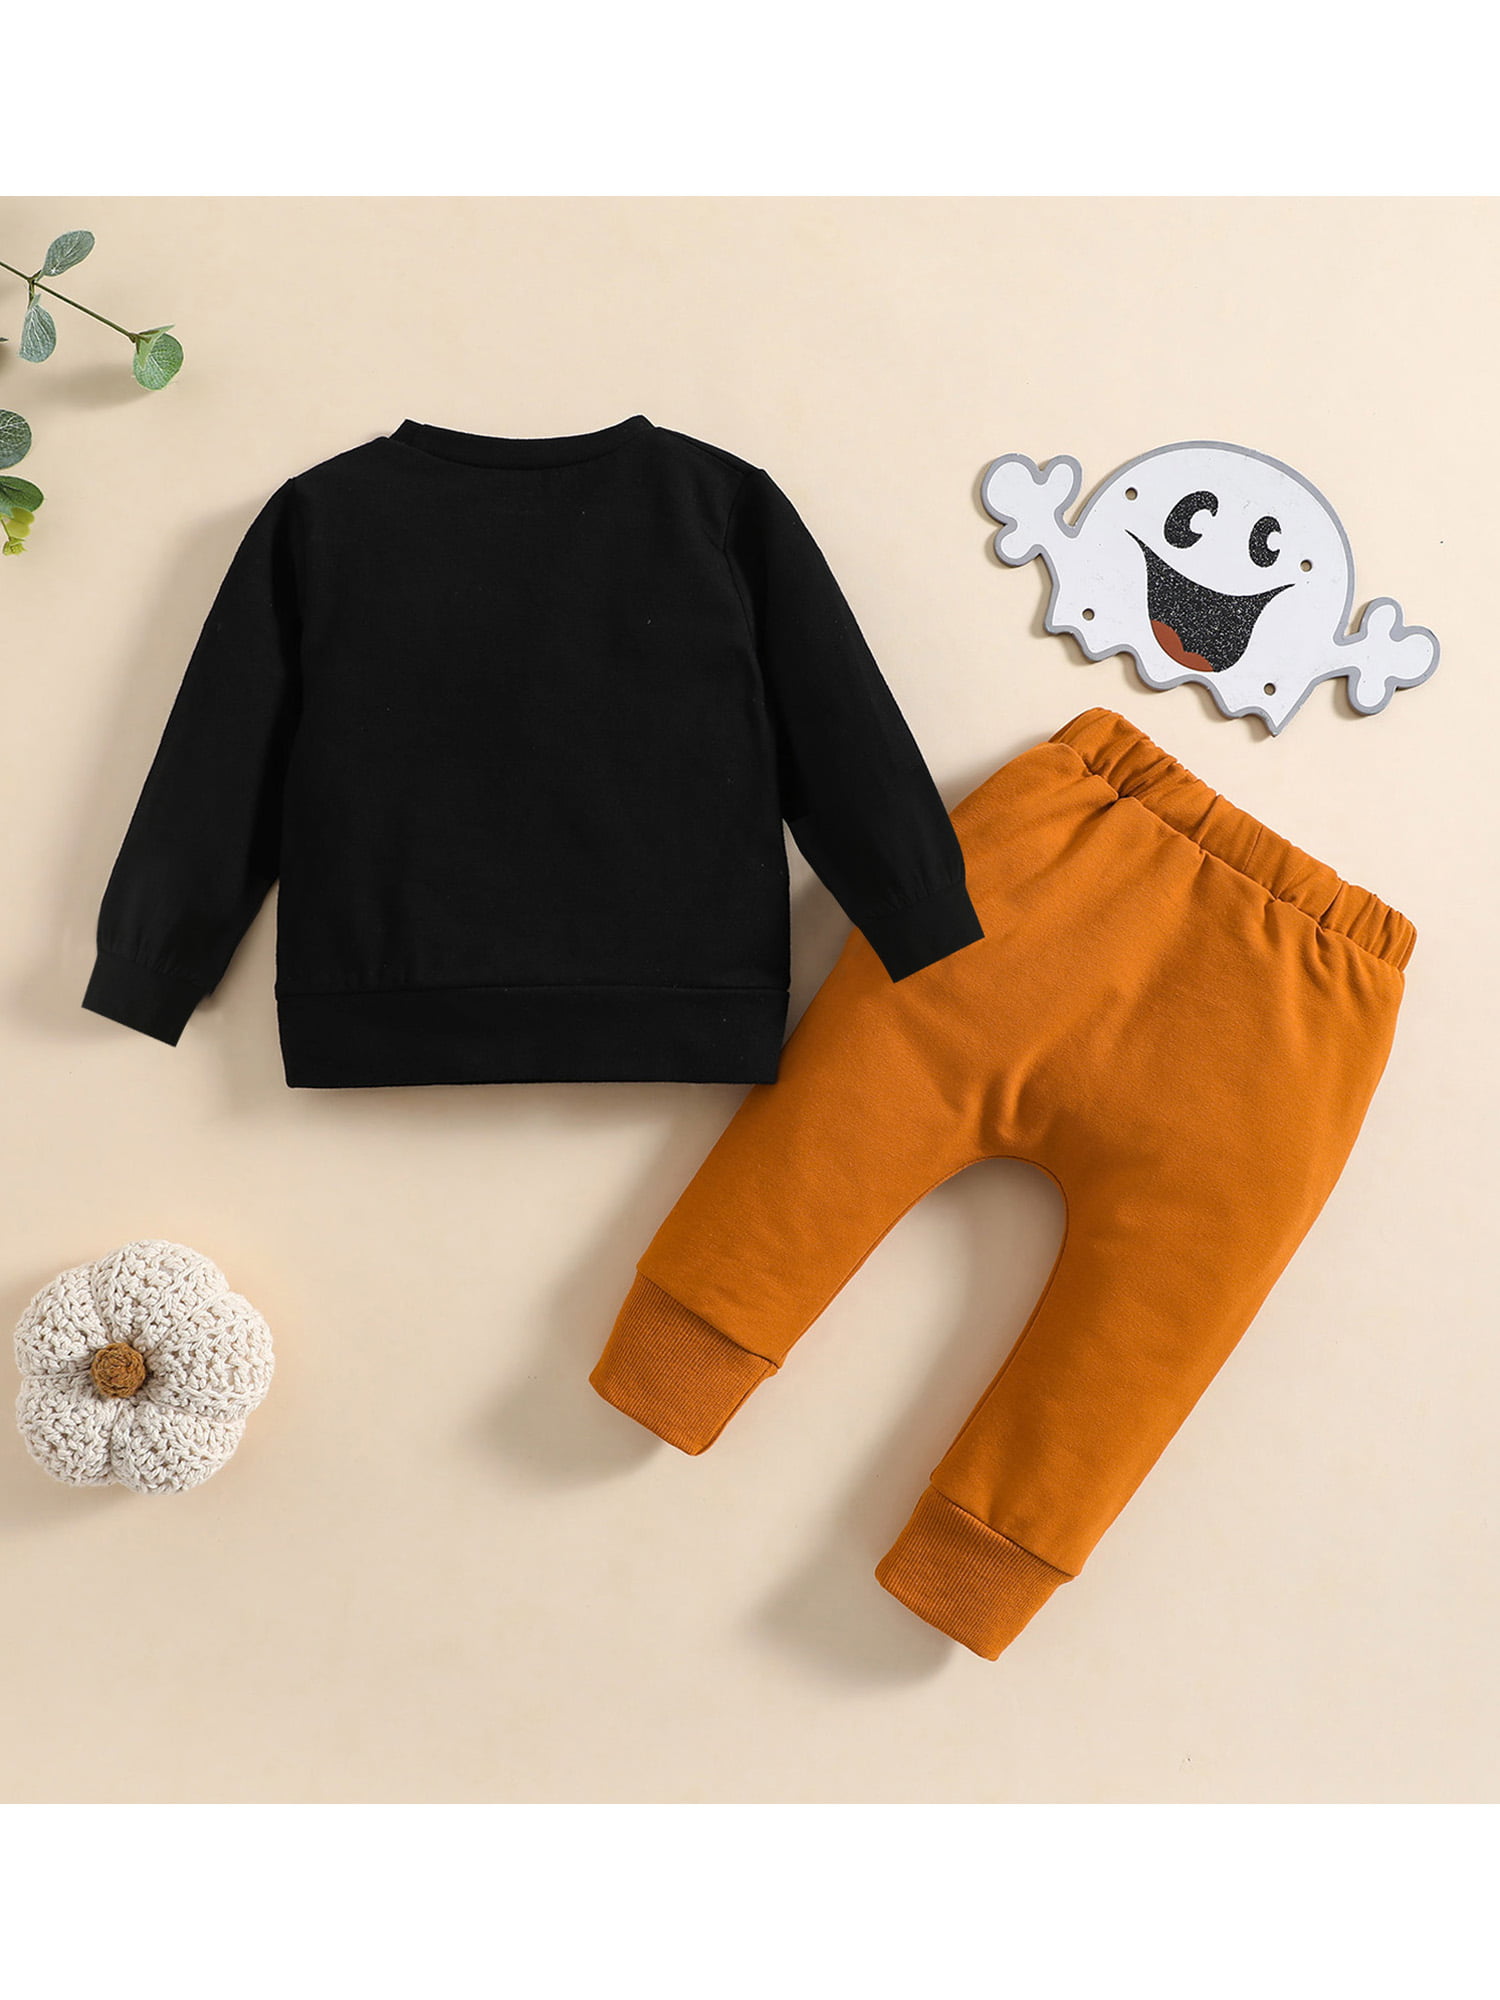 Peyakidsaa Toddler Baby Boy Halloween Outfits Sweatshirt Pullover Long Sleeve  Shirt Pants 